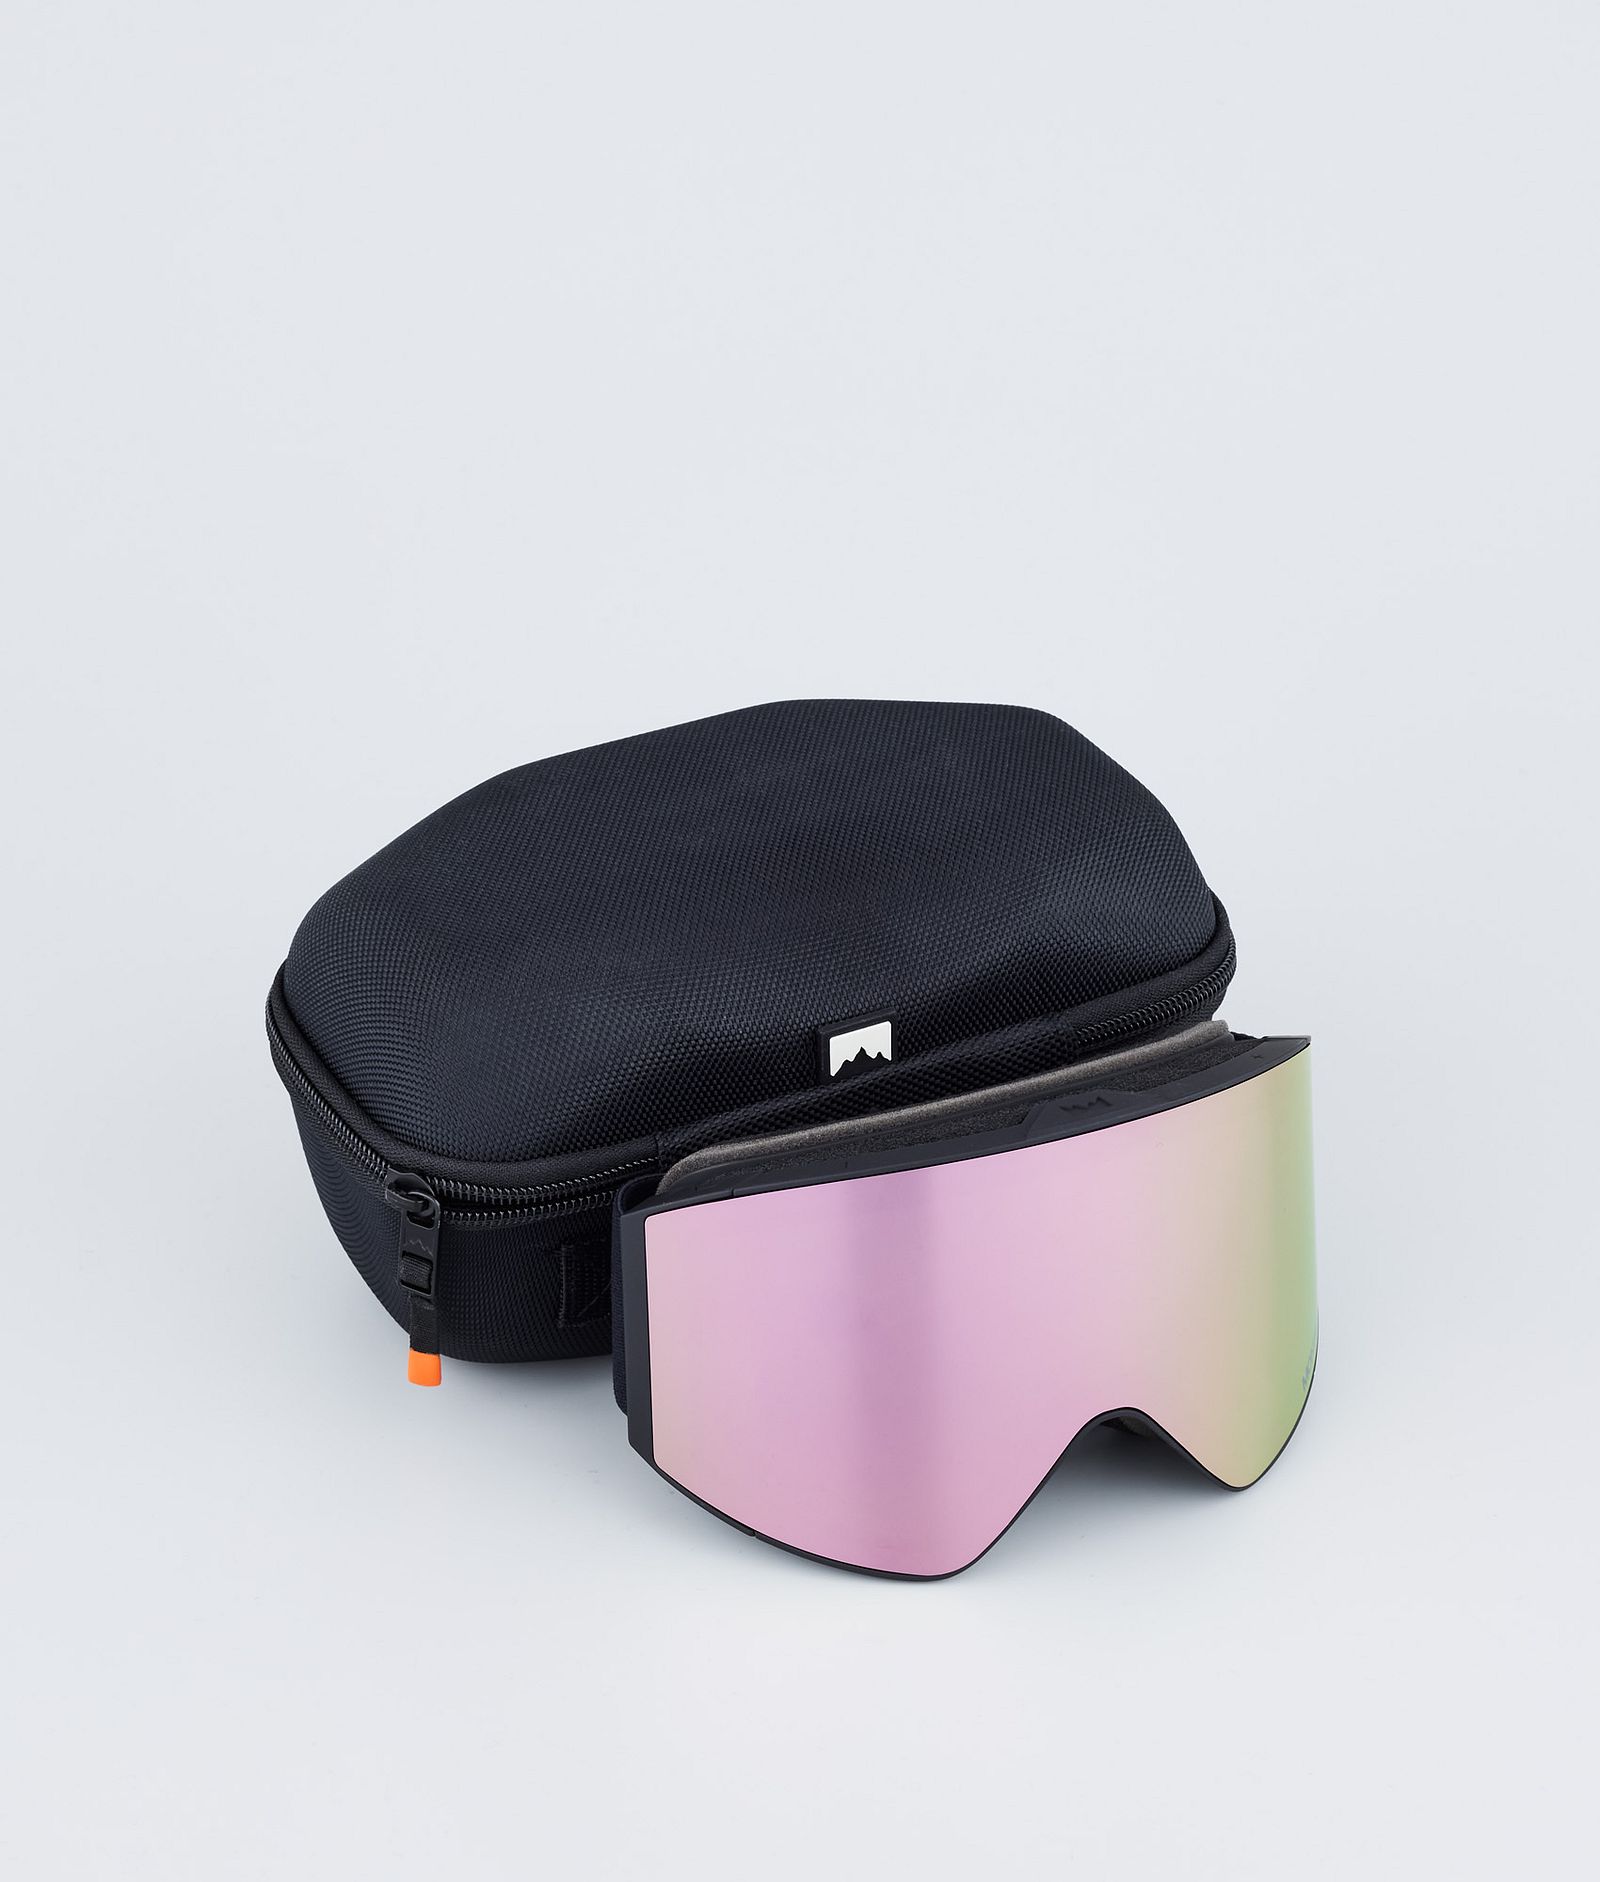 Montec Scope Gafas de esquí Hombre Black W/Black Moon Blue Mirror